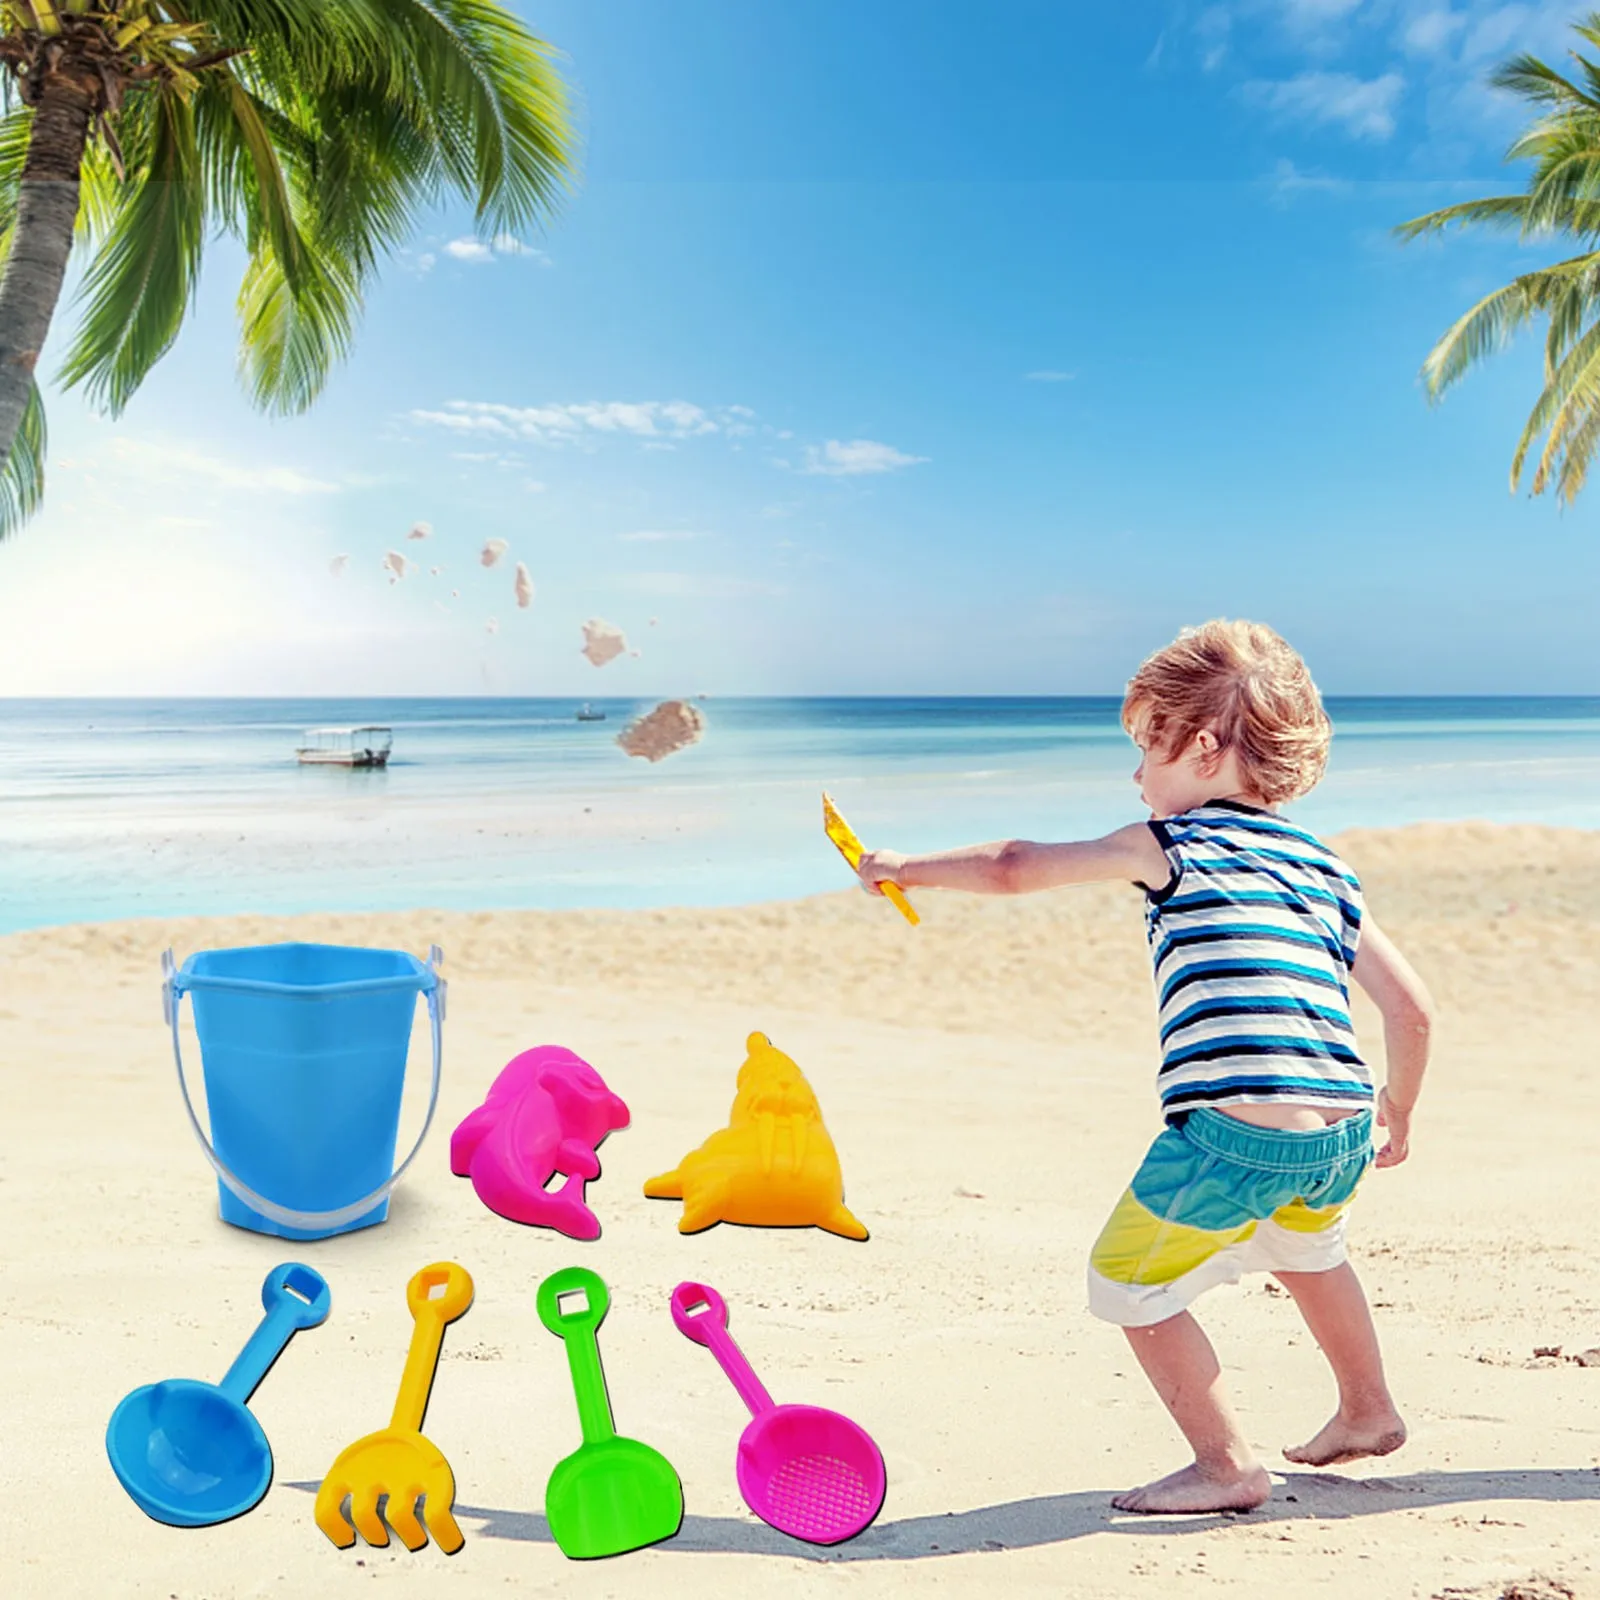 

7 Piece Toys For Children Beach Toy Sand Set Sandbox For Kids Sand Play Sandpit Toy Summer Outdoor Toy Beach Accessories